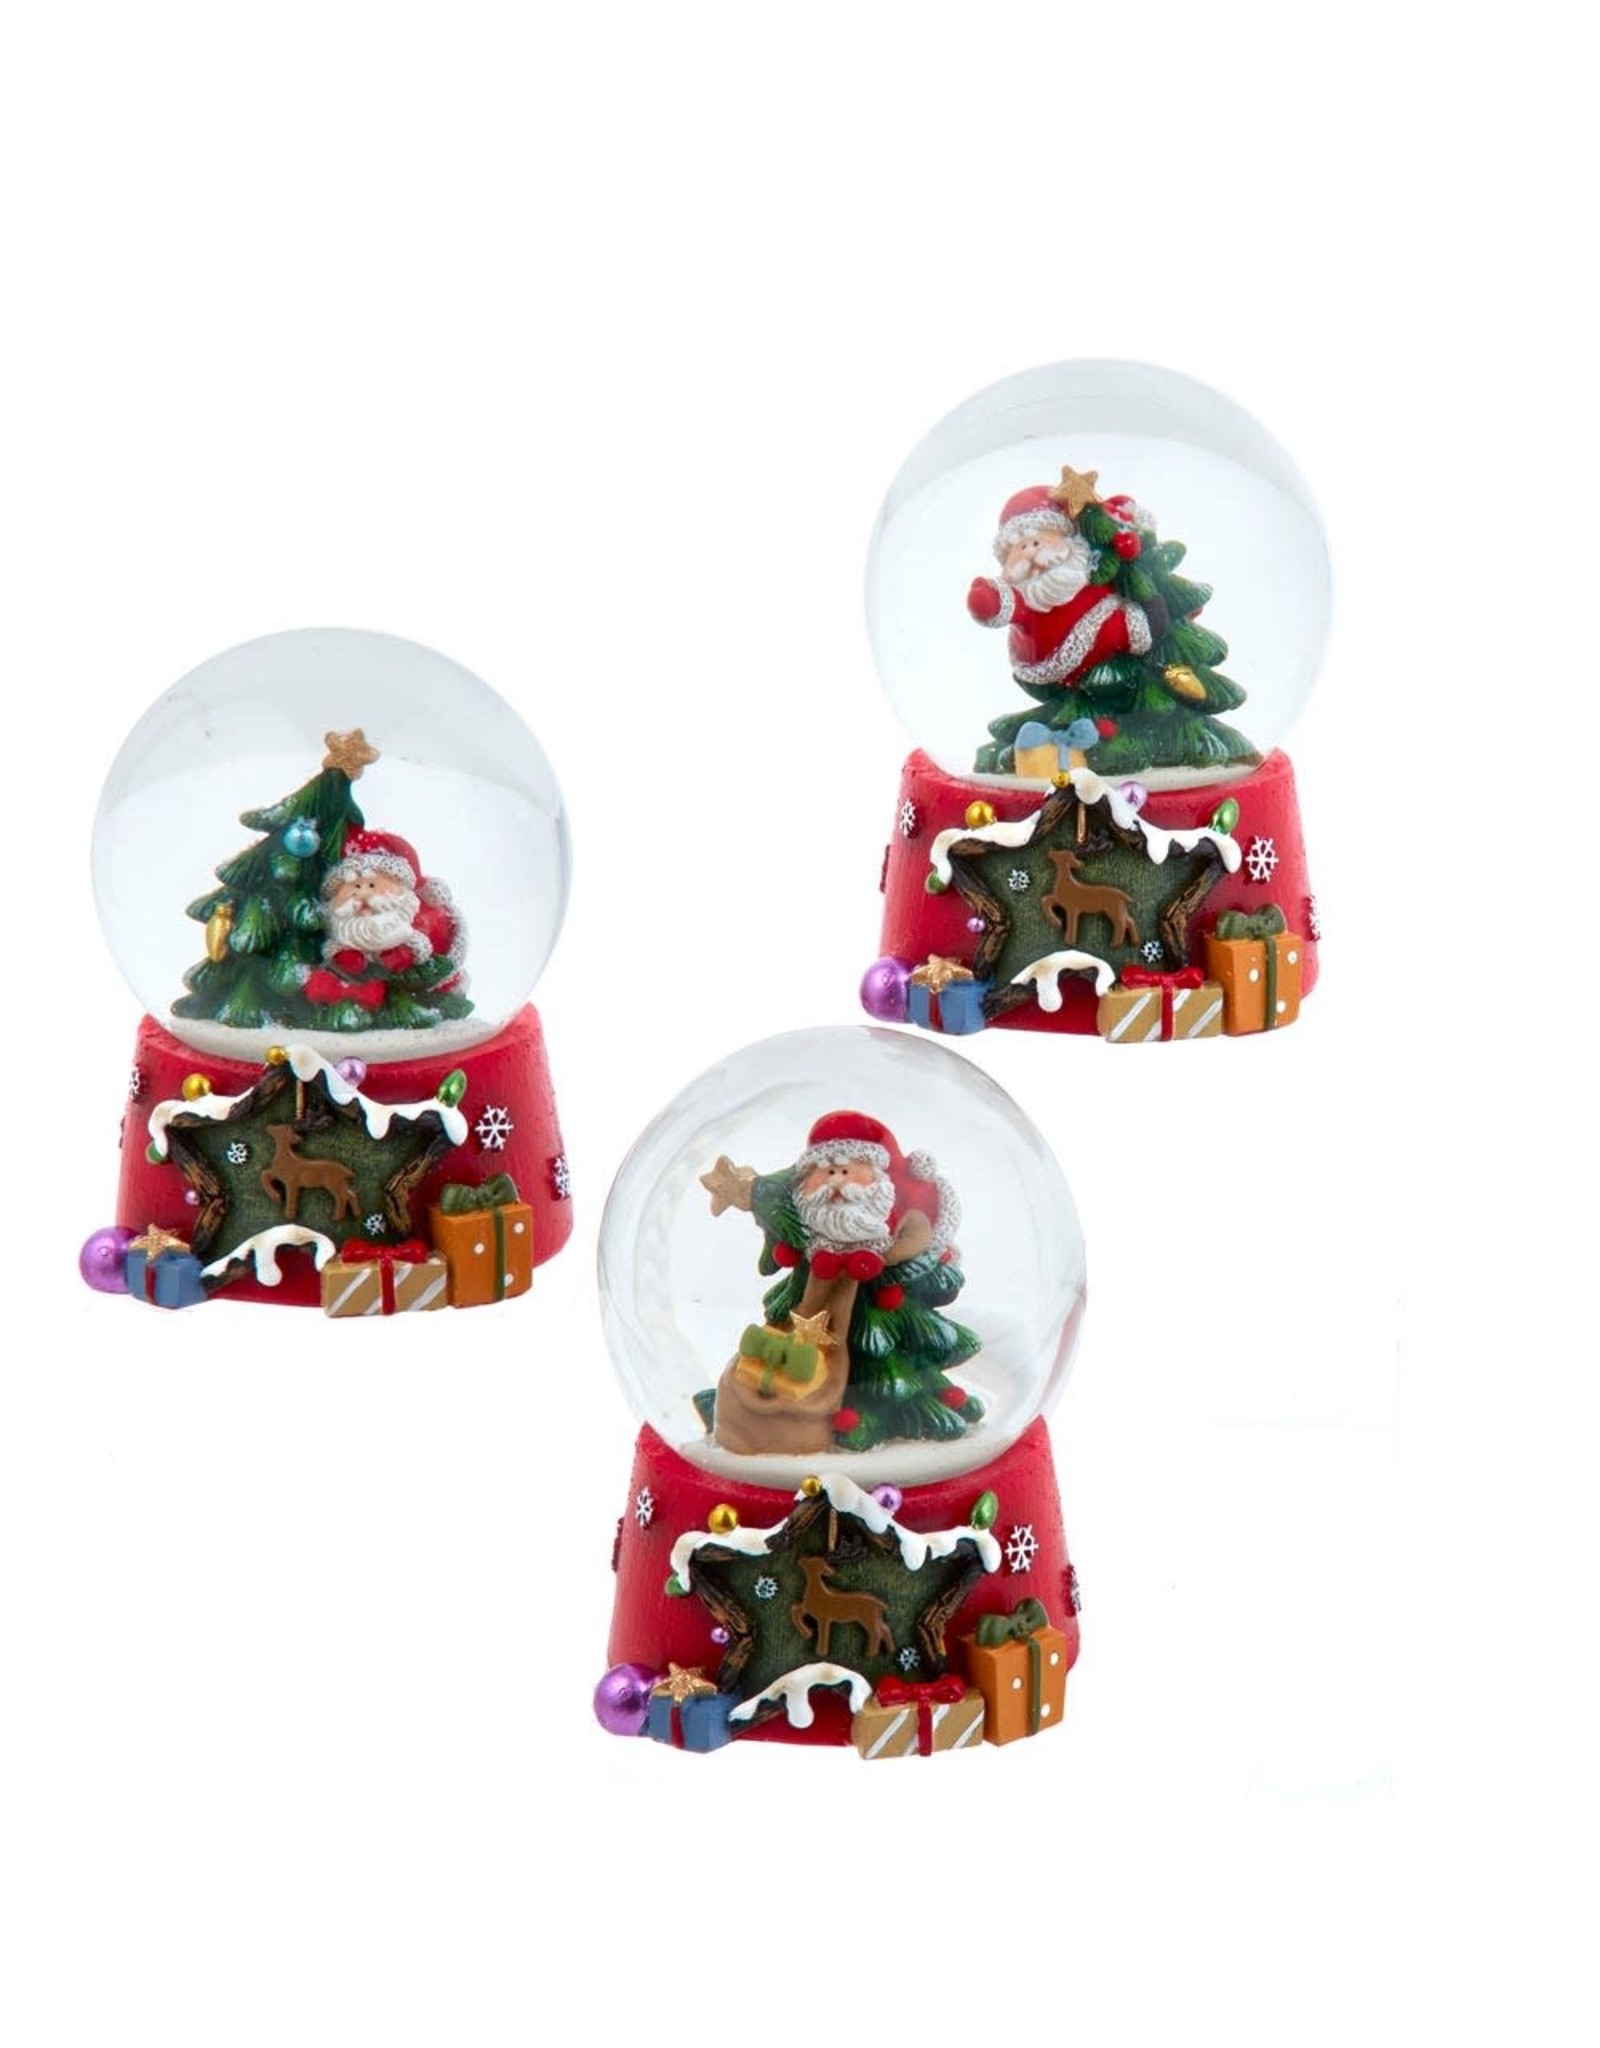 Kurt Adler Christmas Snow Globes 65mm 3 Assorted Santa Water Globes